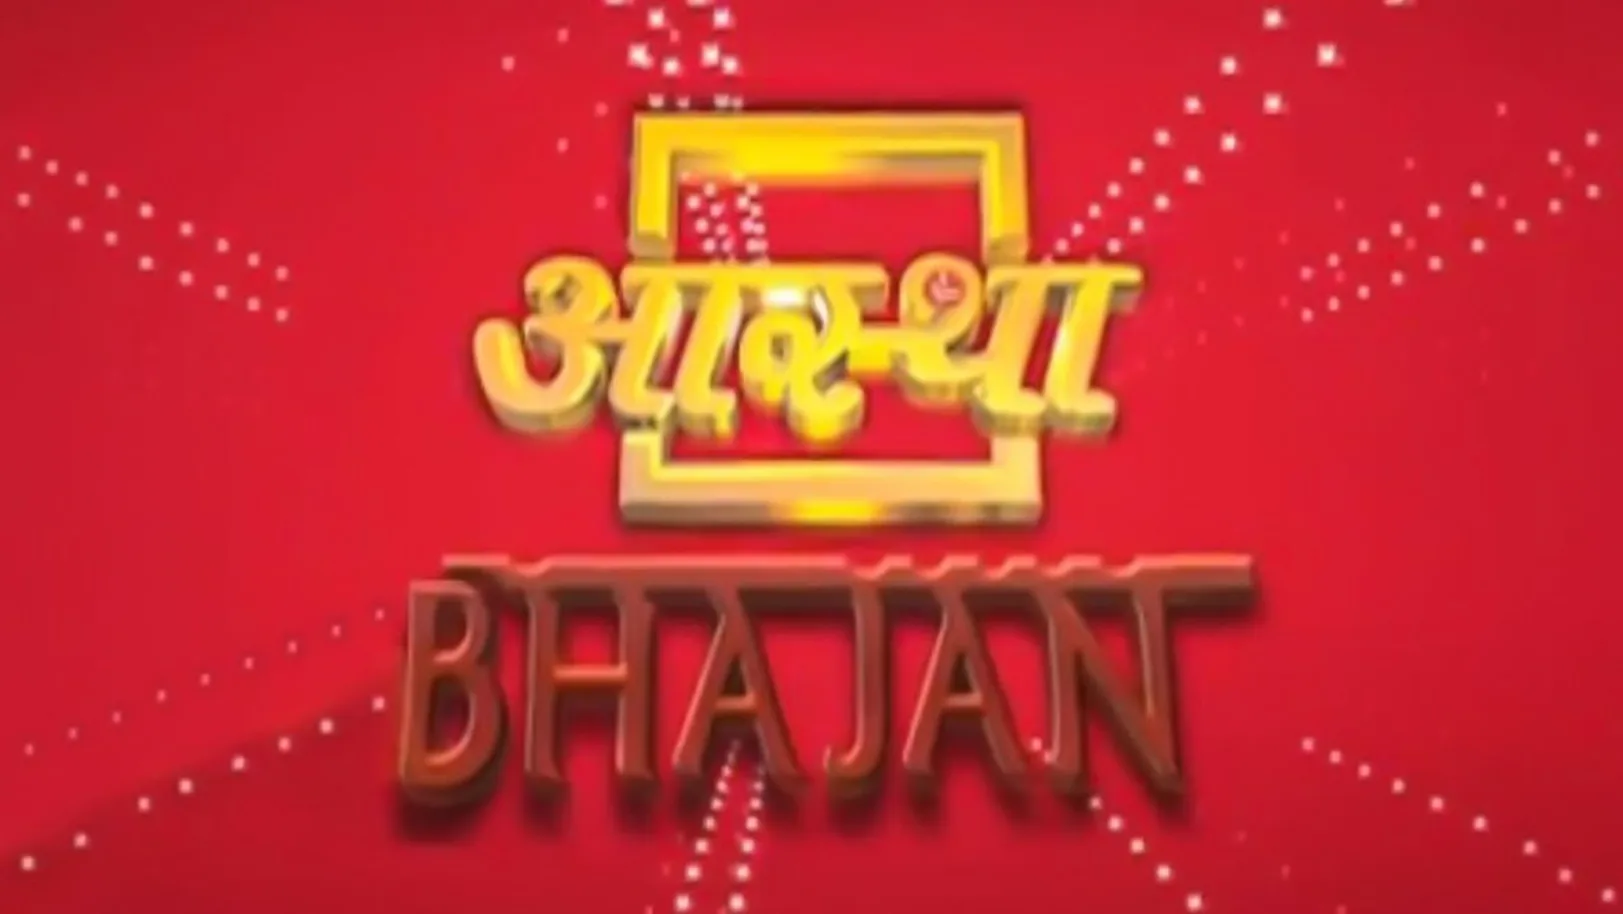 Aastha Bhajan Special Streaming Now On Aastha Bhajan